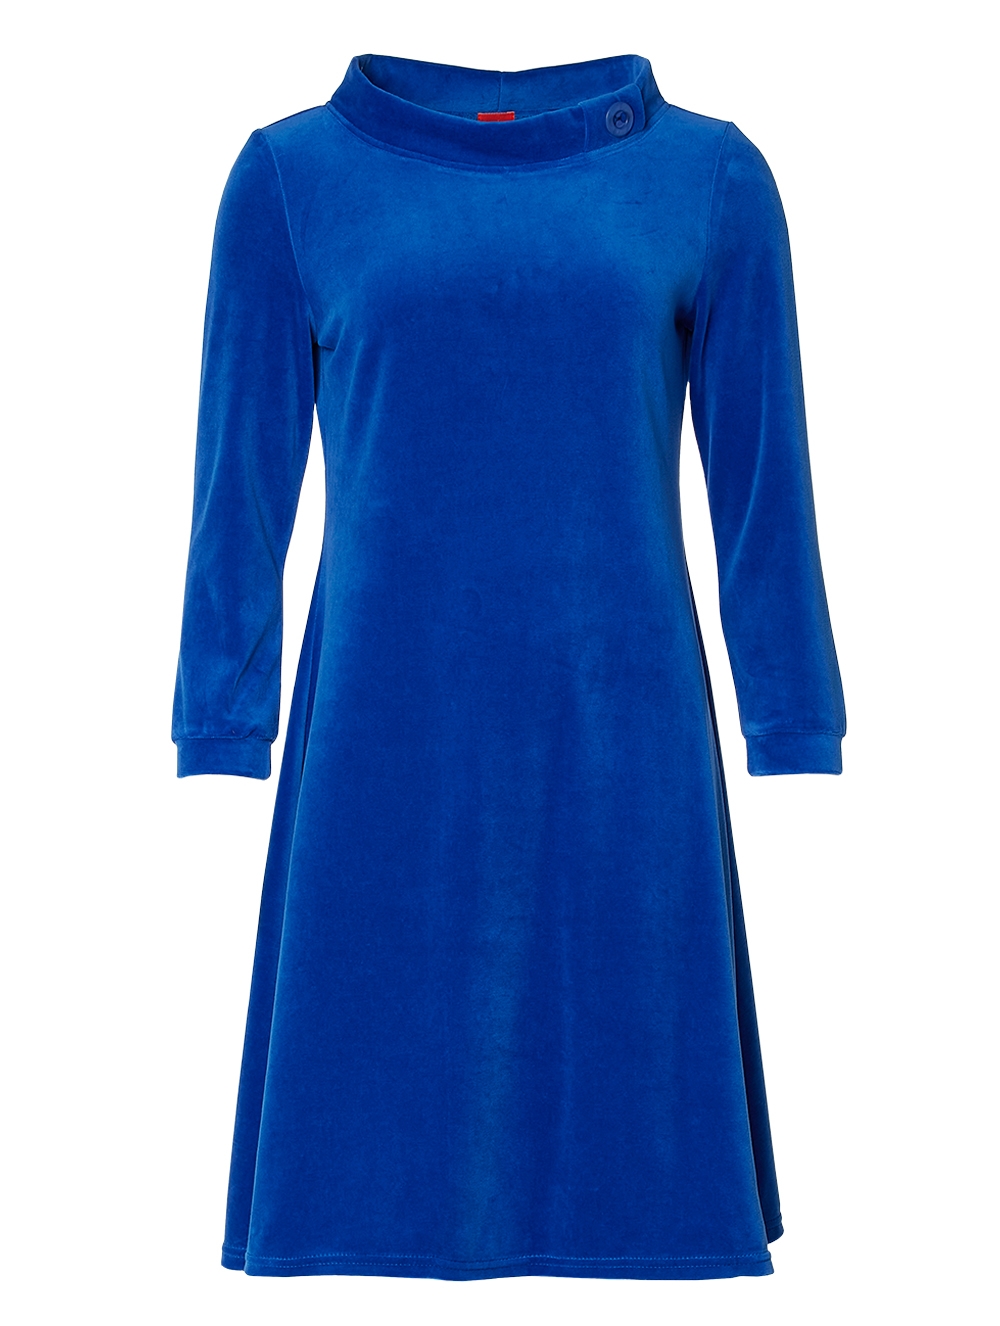 uheldigvis virkelighed Jeg vasker mit tøj duCaroline Velvet Skyblue - skøn kjole fra danske du Milde